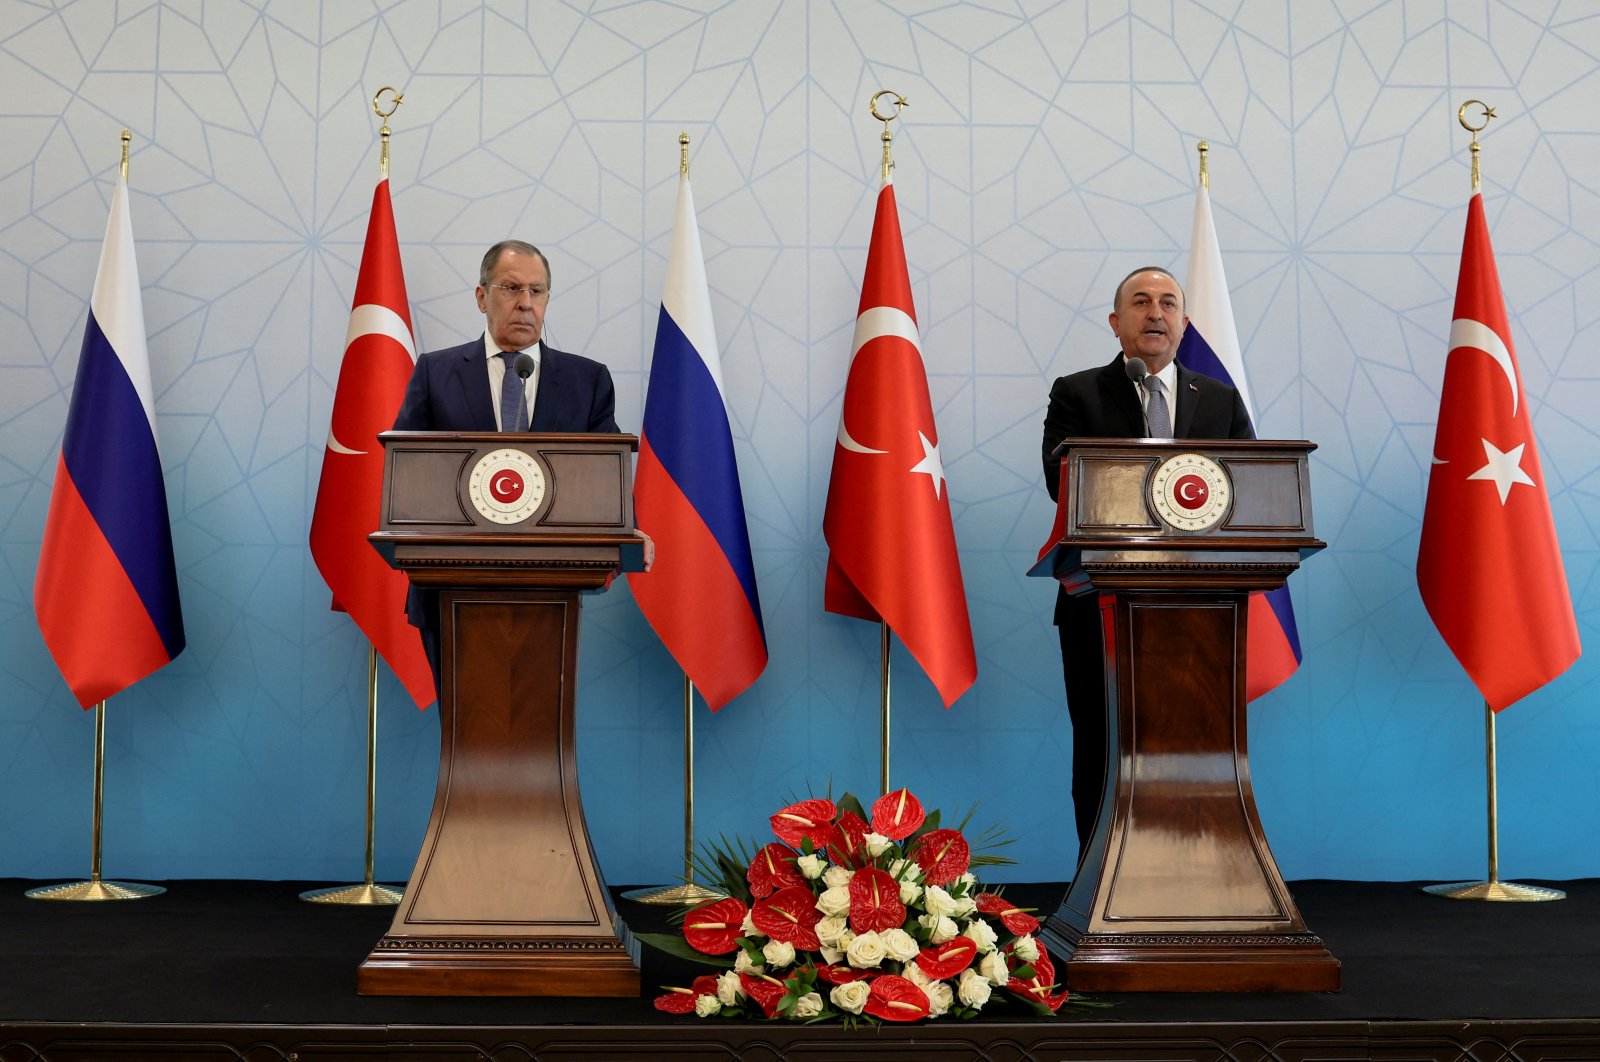 Rencana ekspor gandum Ukraina masuk akal, kata Turki setelah pertemuan Rusia